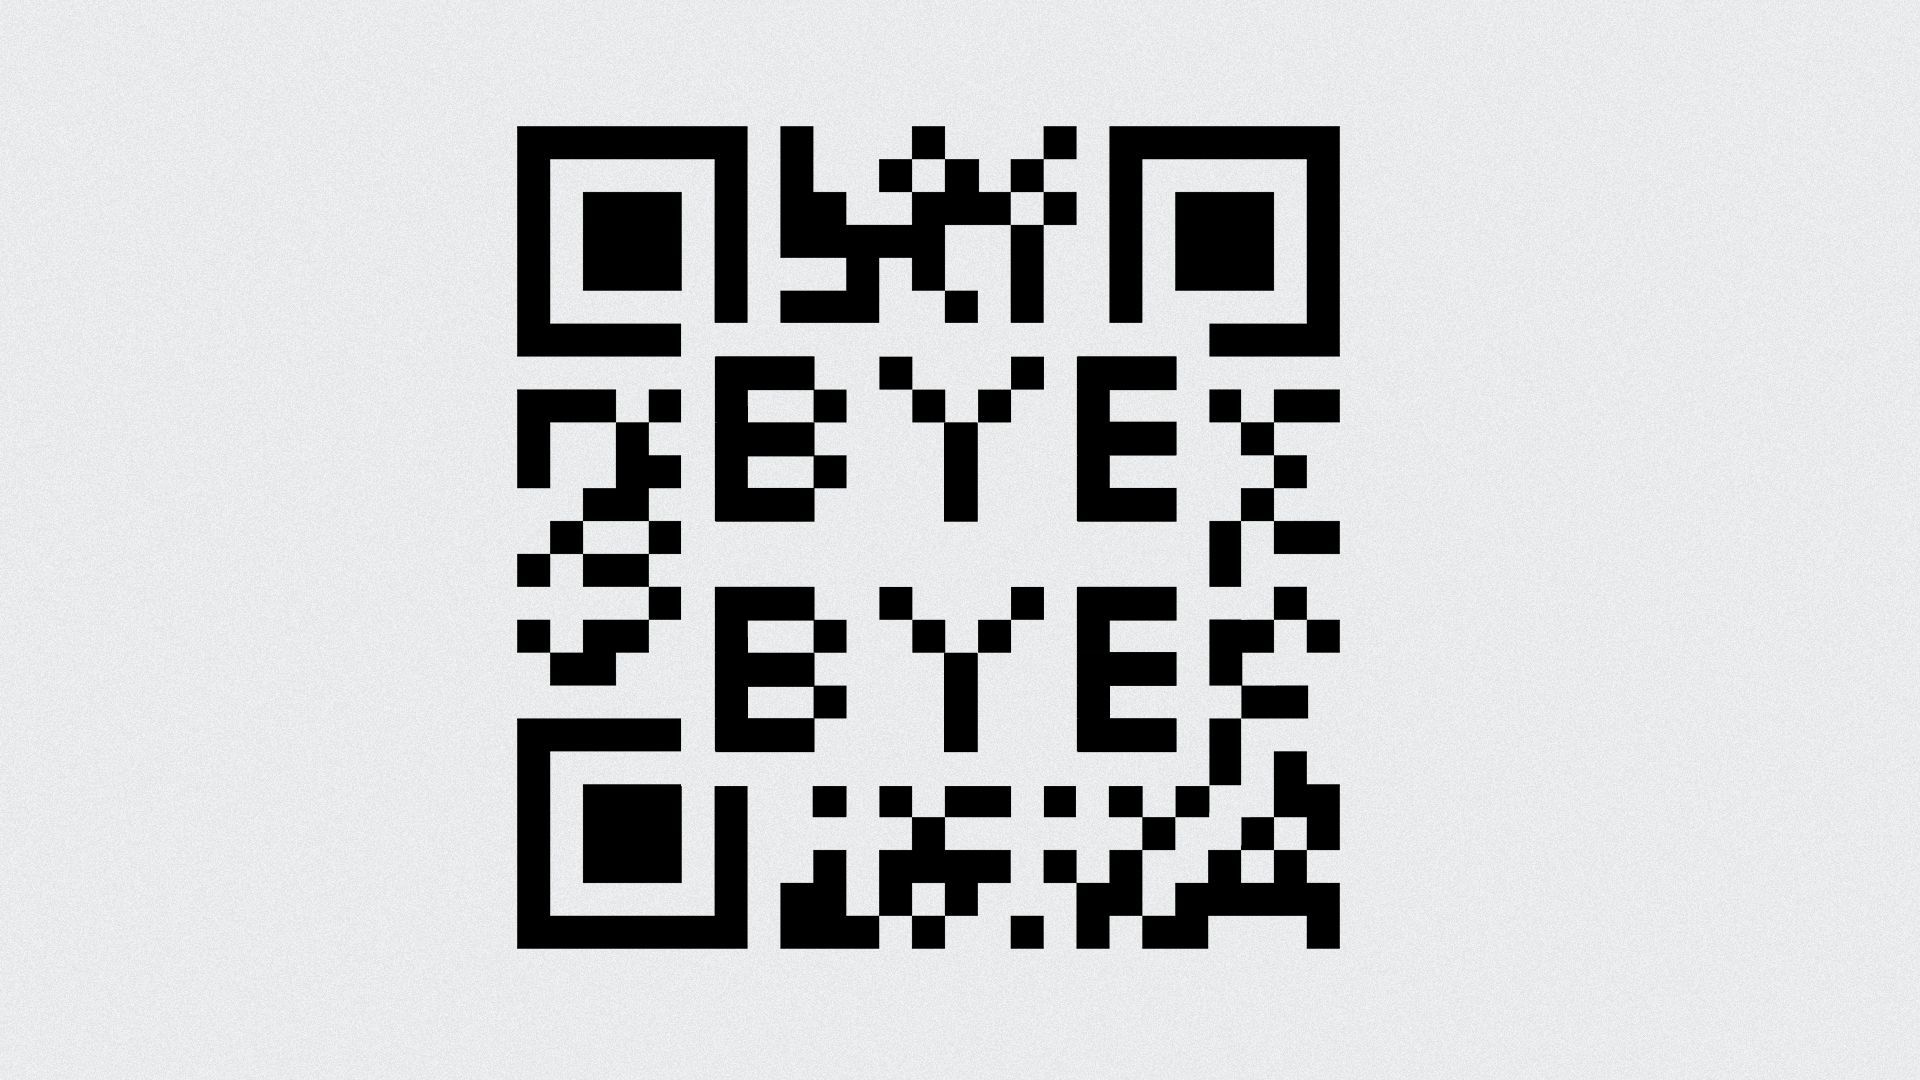 Illustration of a QR code with "Bye Bye" written inside.